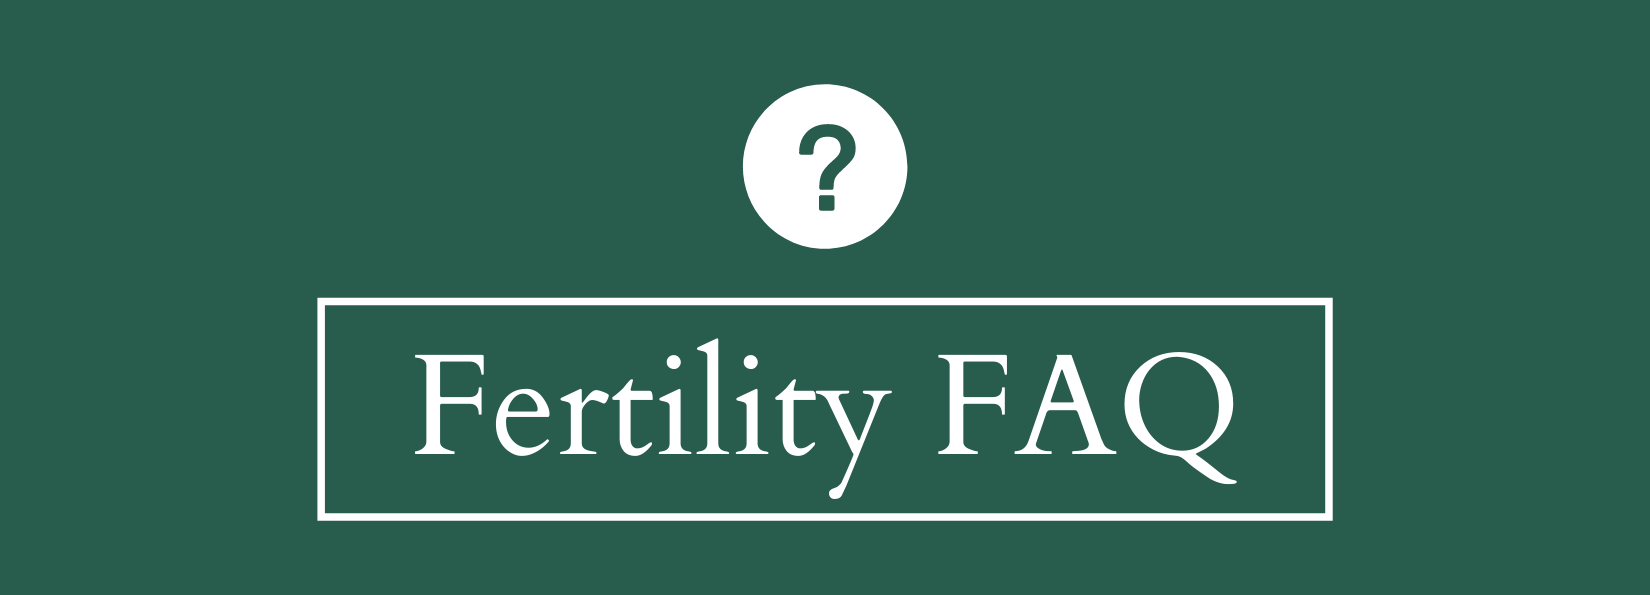 IVF FAQ Graphic